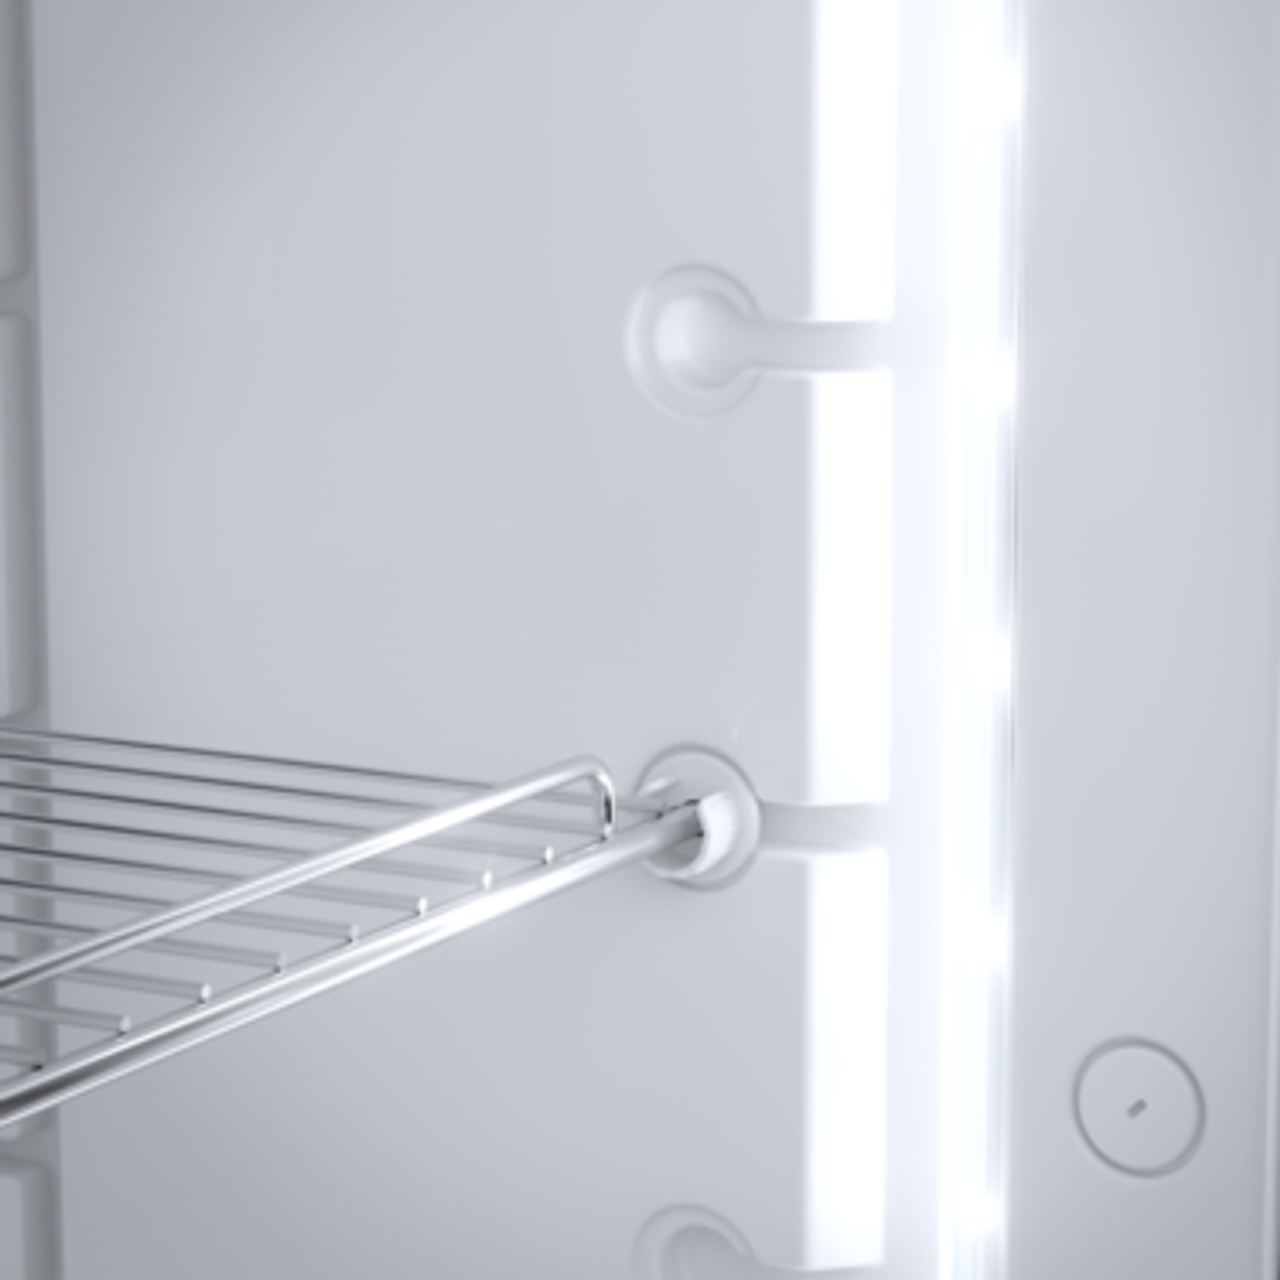 Dometic RC 10.4T 90 refrigerator LED light bar